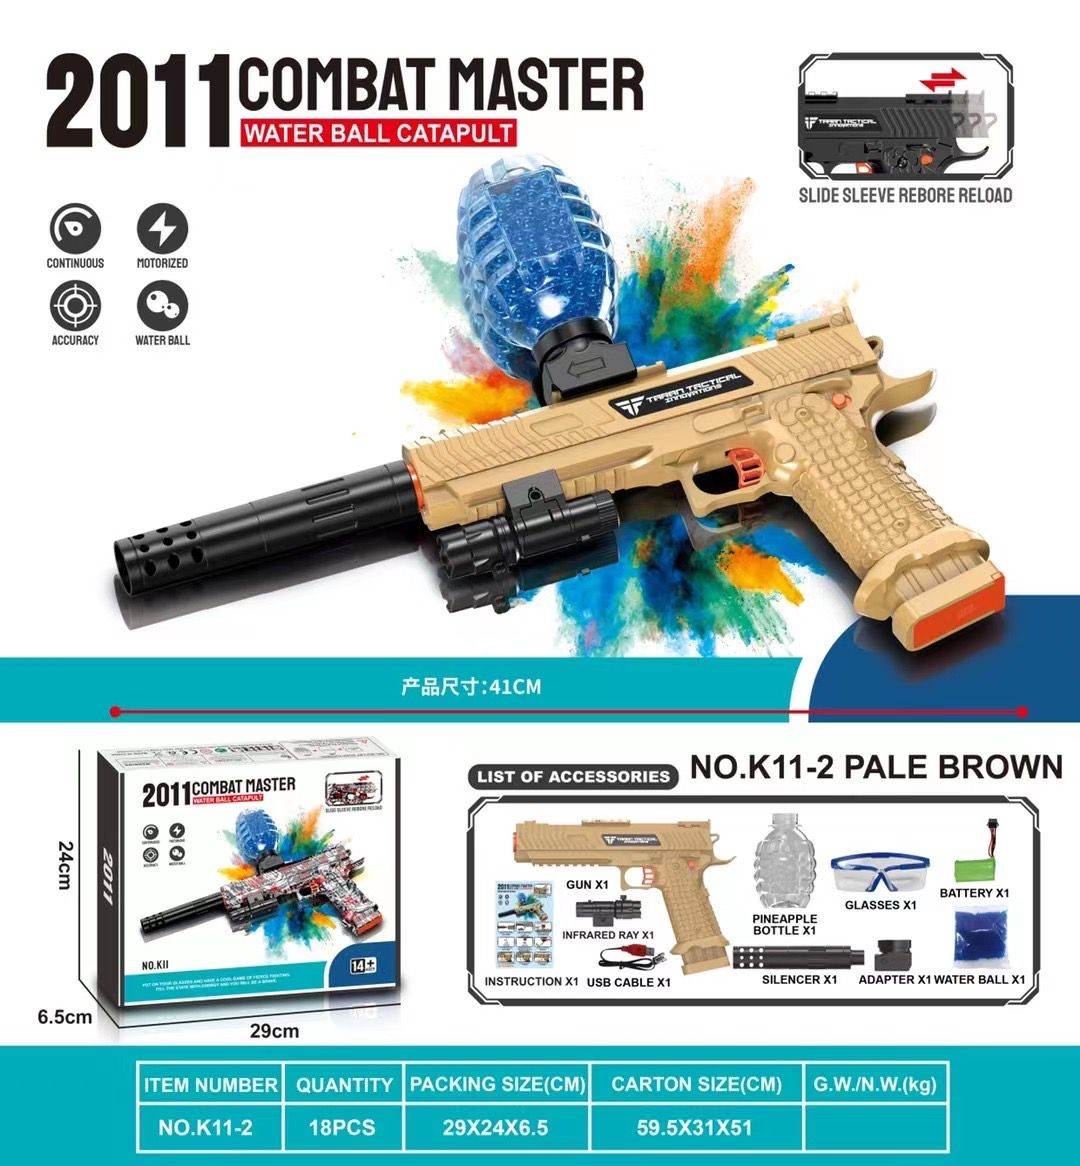 New 2011 Combat Master Gel blaster